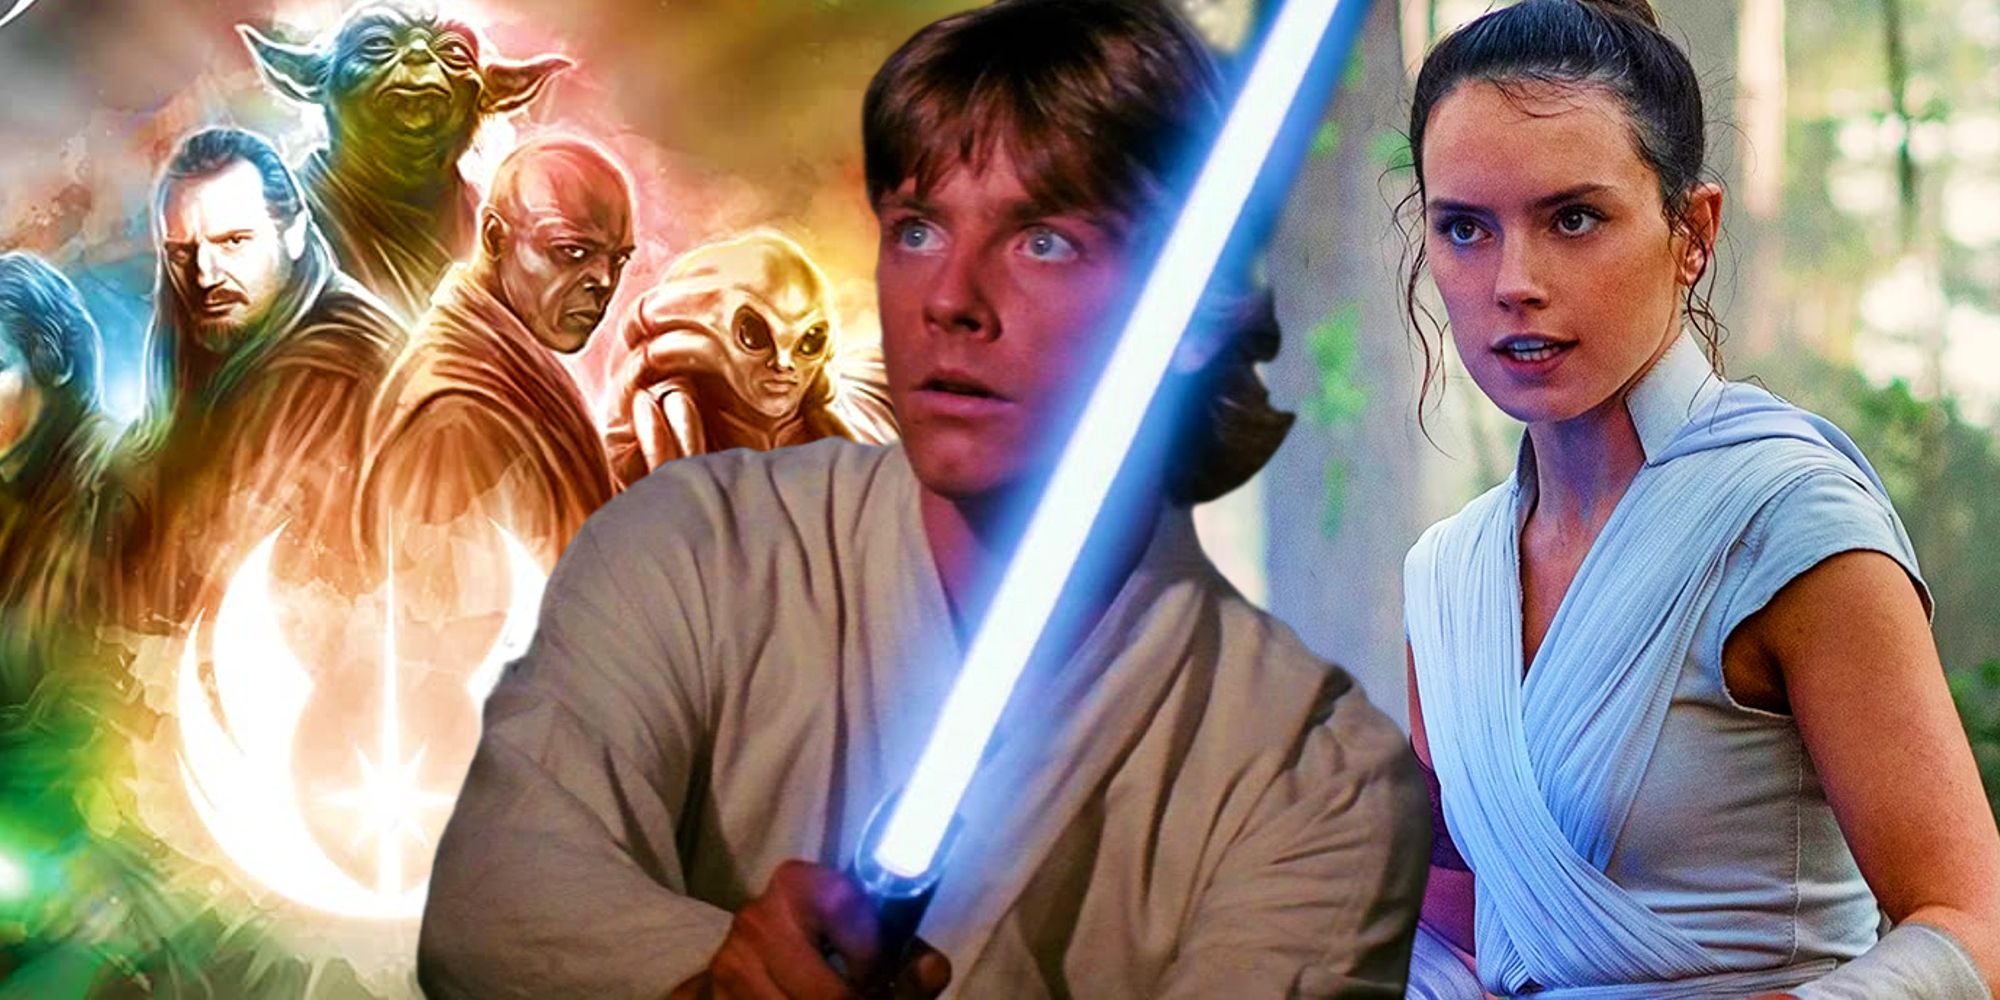 Star Wars Jedi Order from the prequels next to Luke and Rey Skywalker